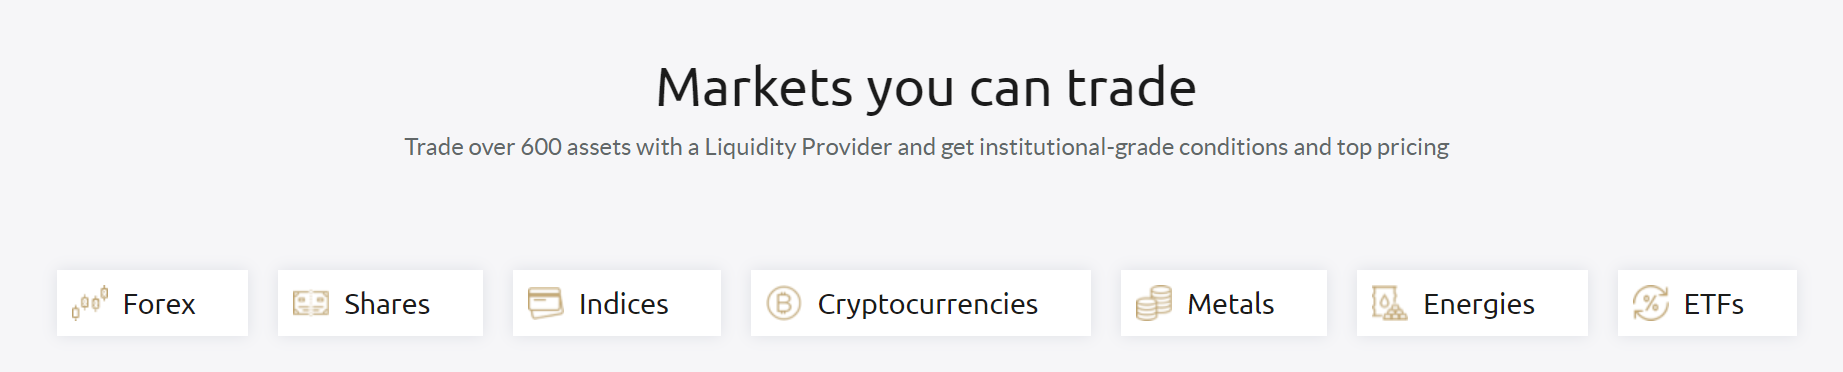 TopFX_trade_markets